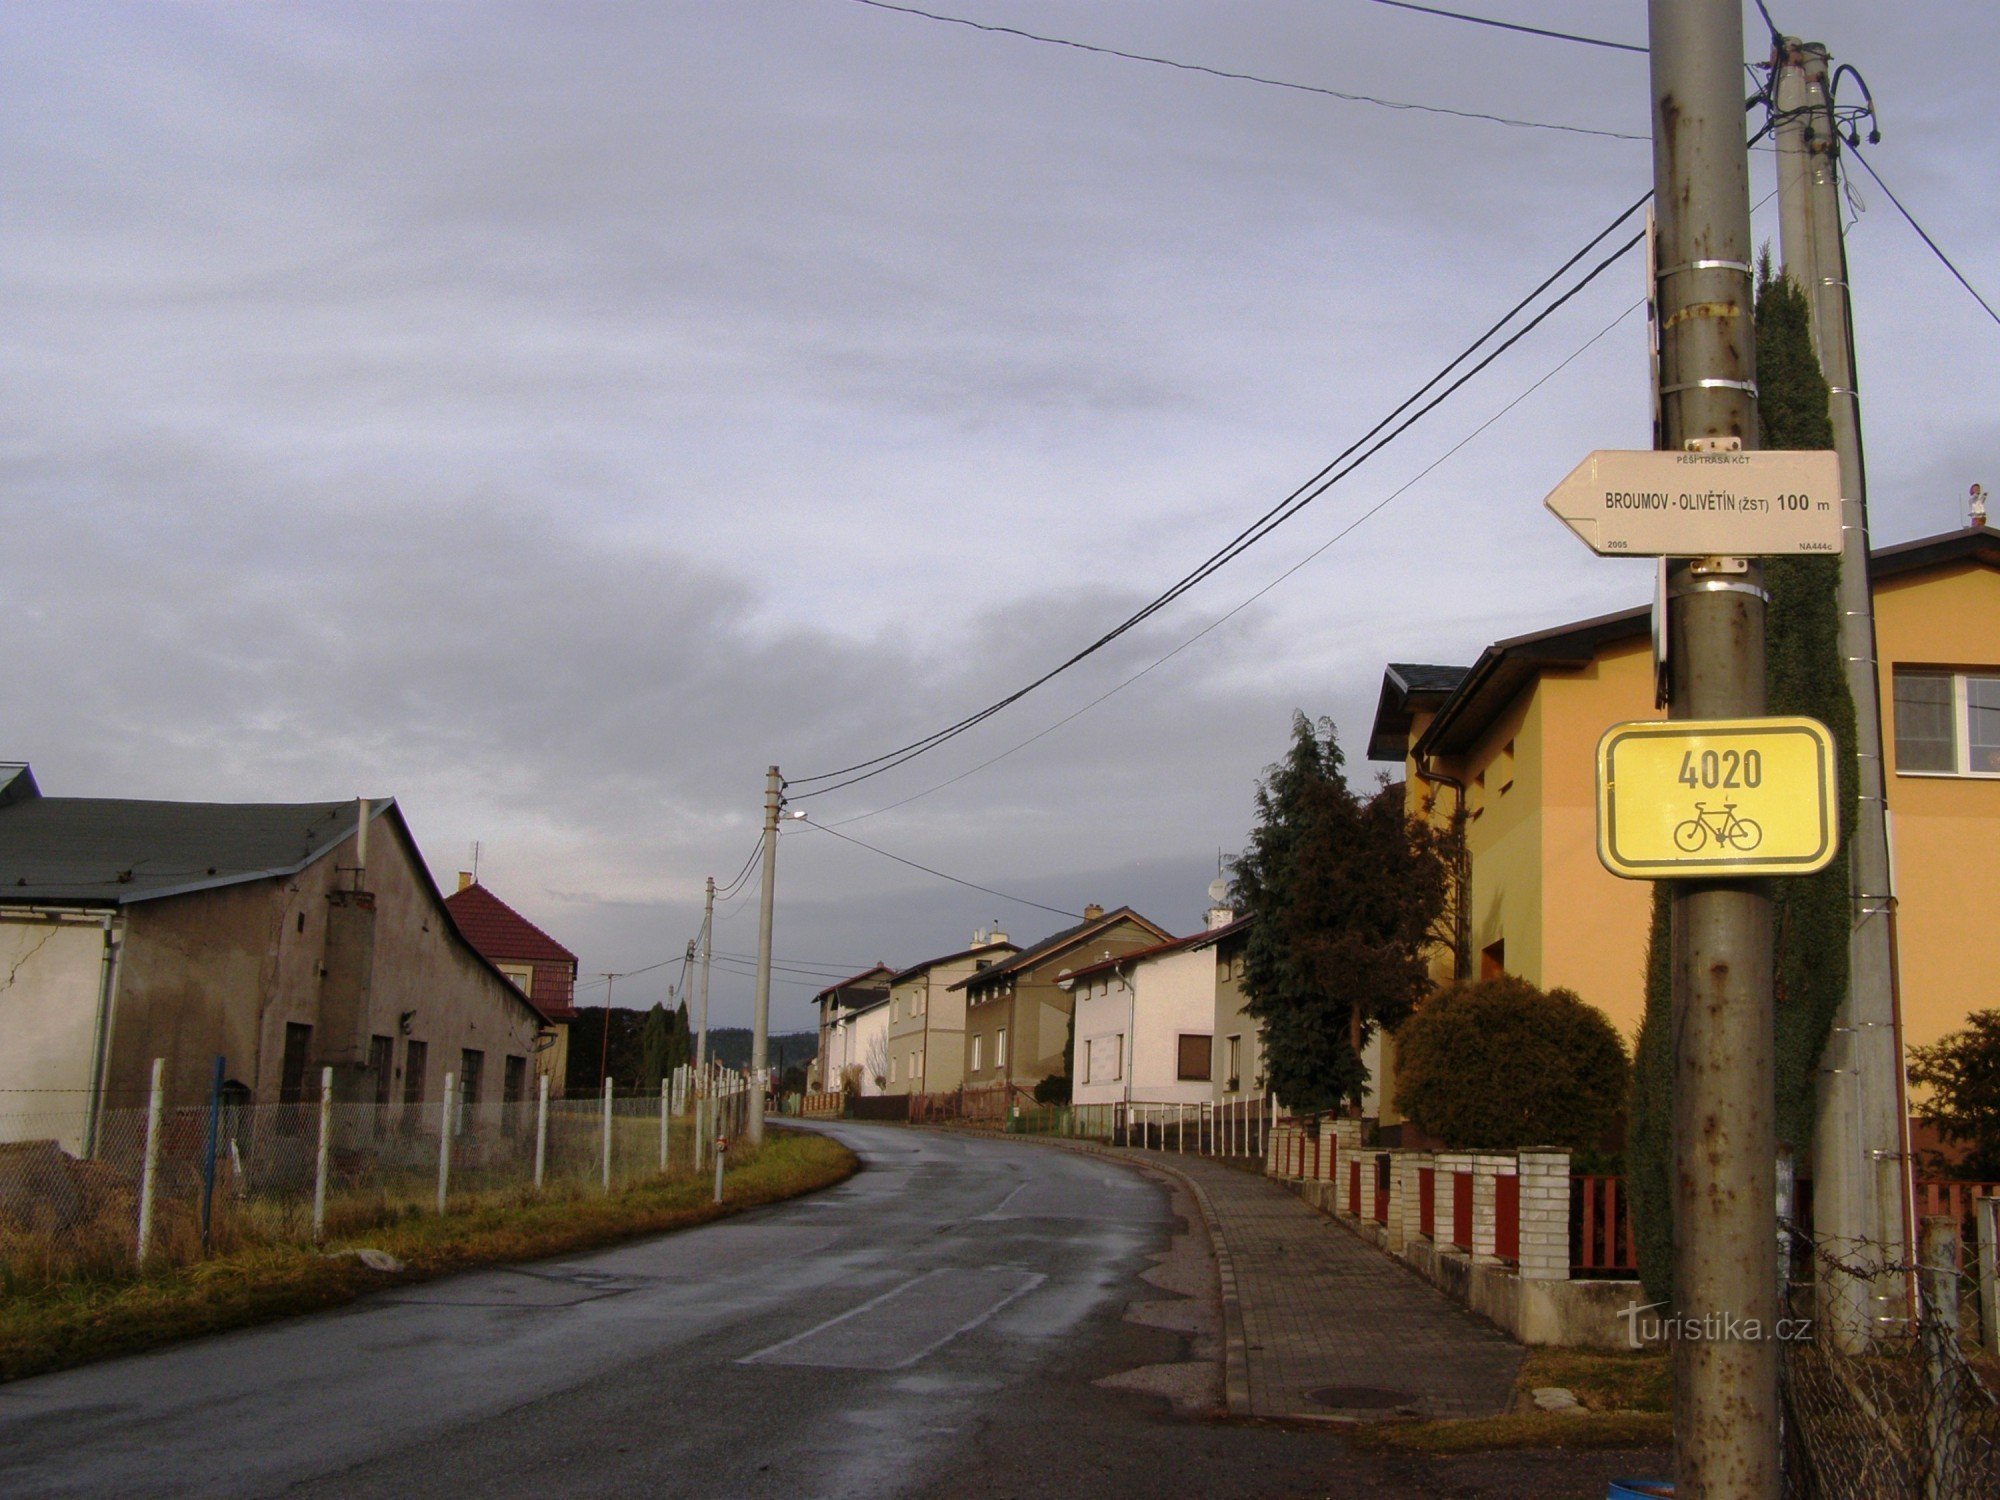 tourist crossroads - Broumov, Olivetín